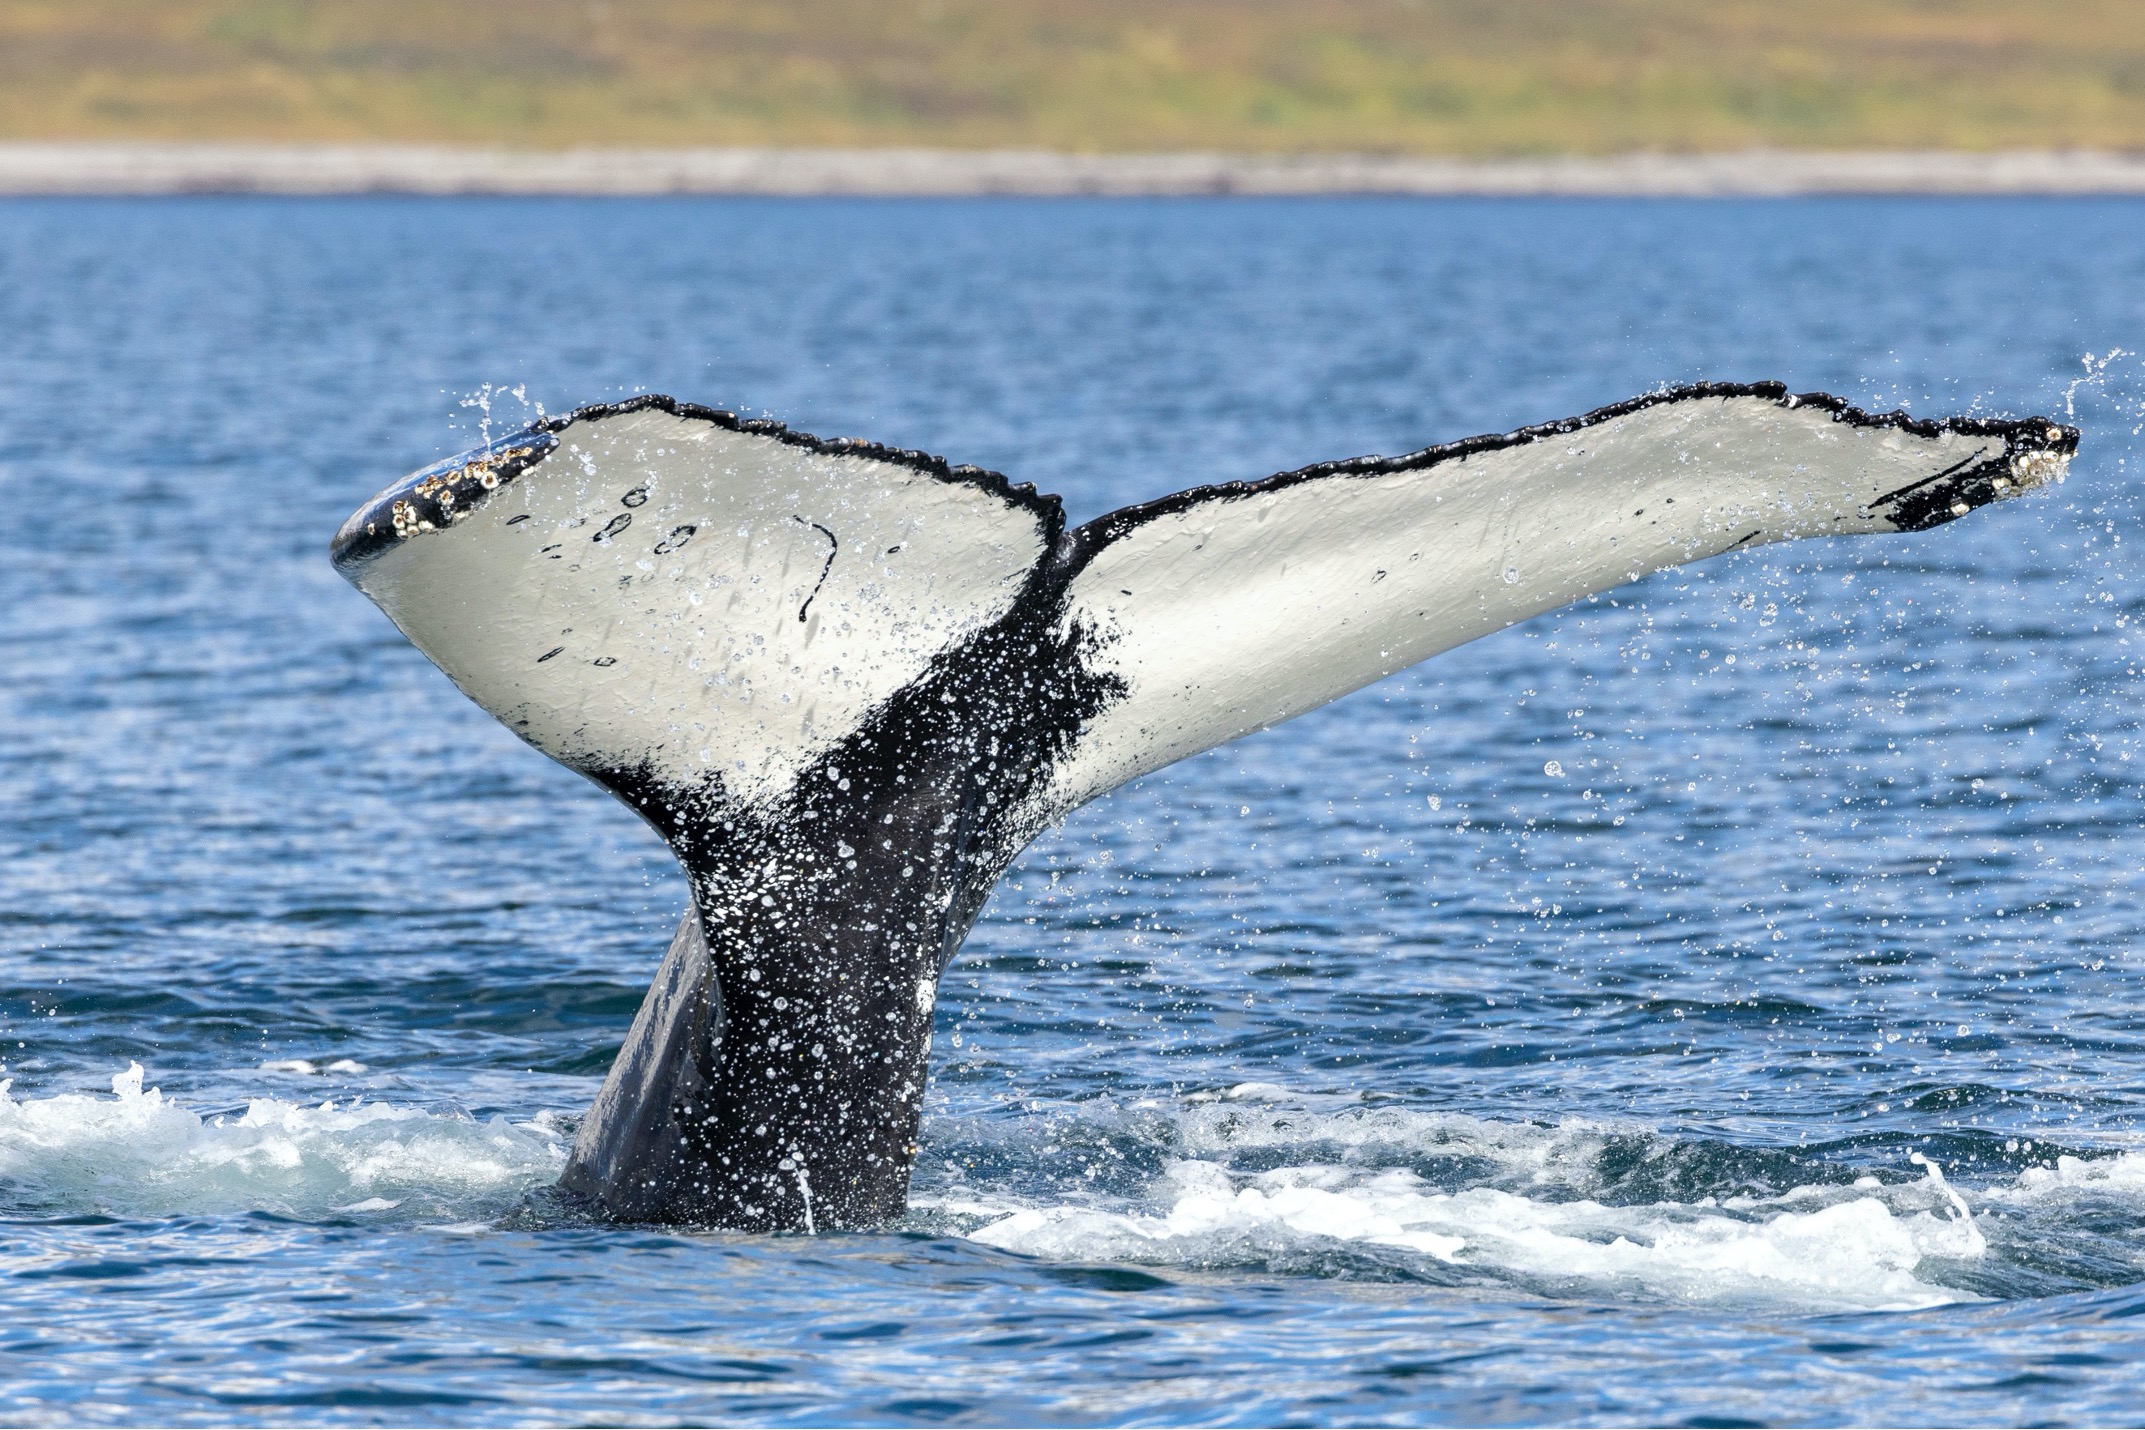 a humpback whale dives